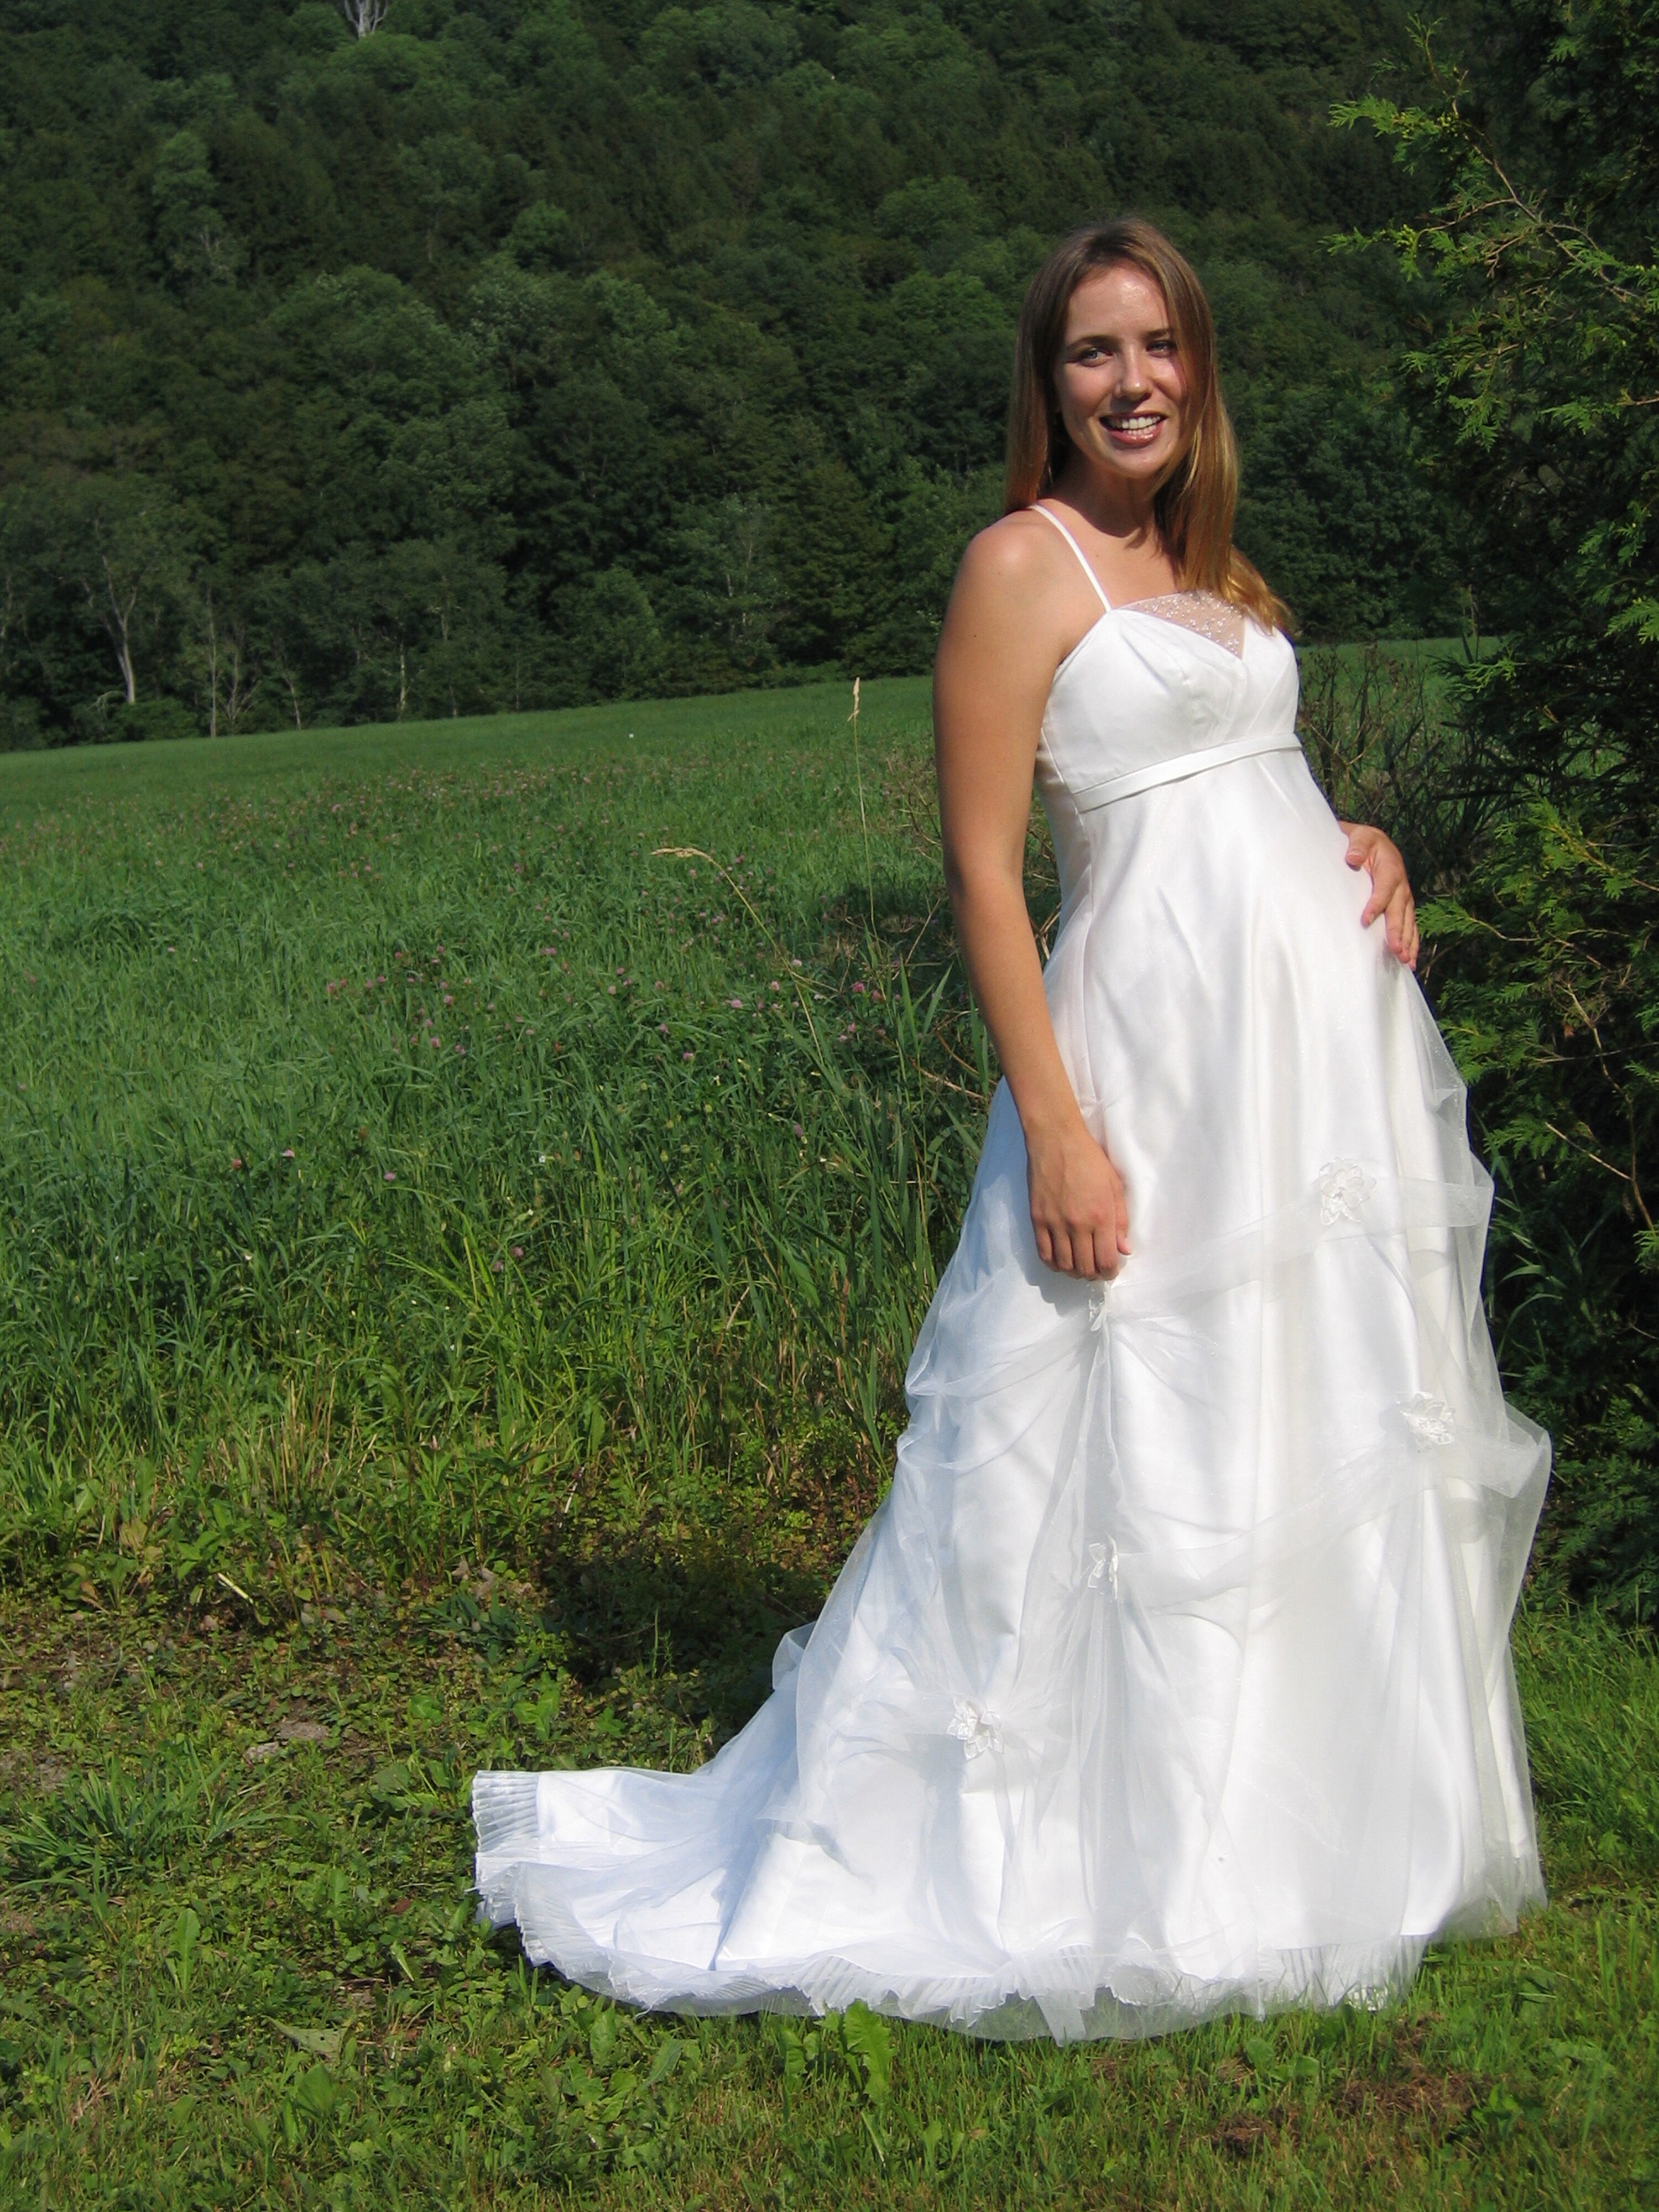 Wedding dresses for pregnancy Photo - 8